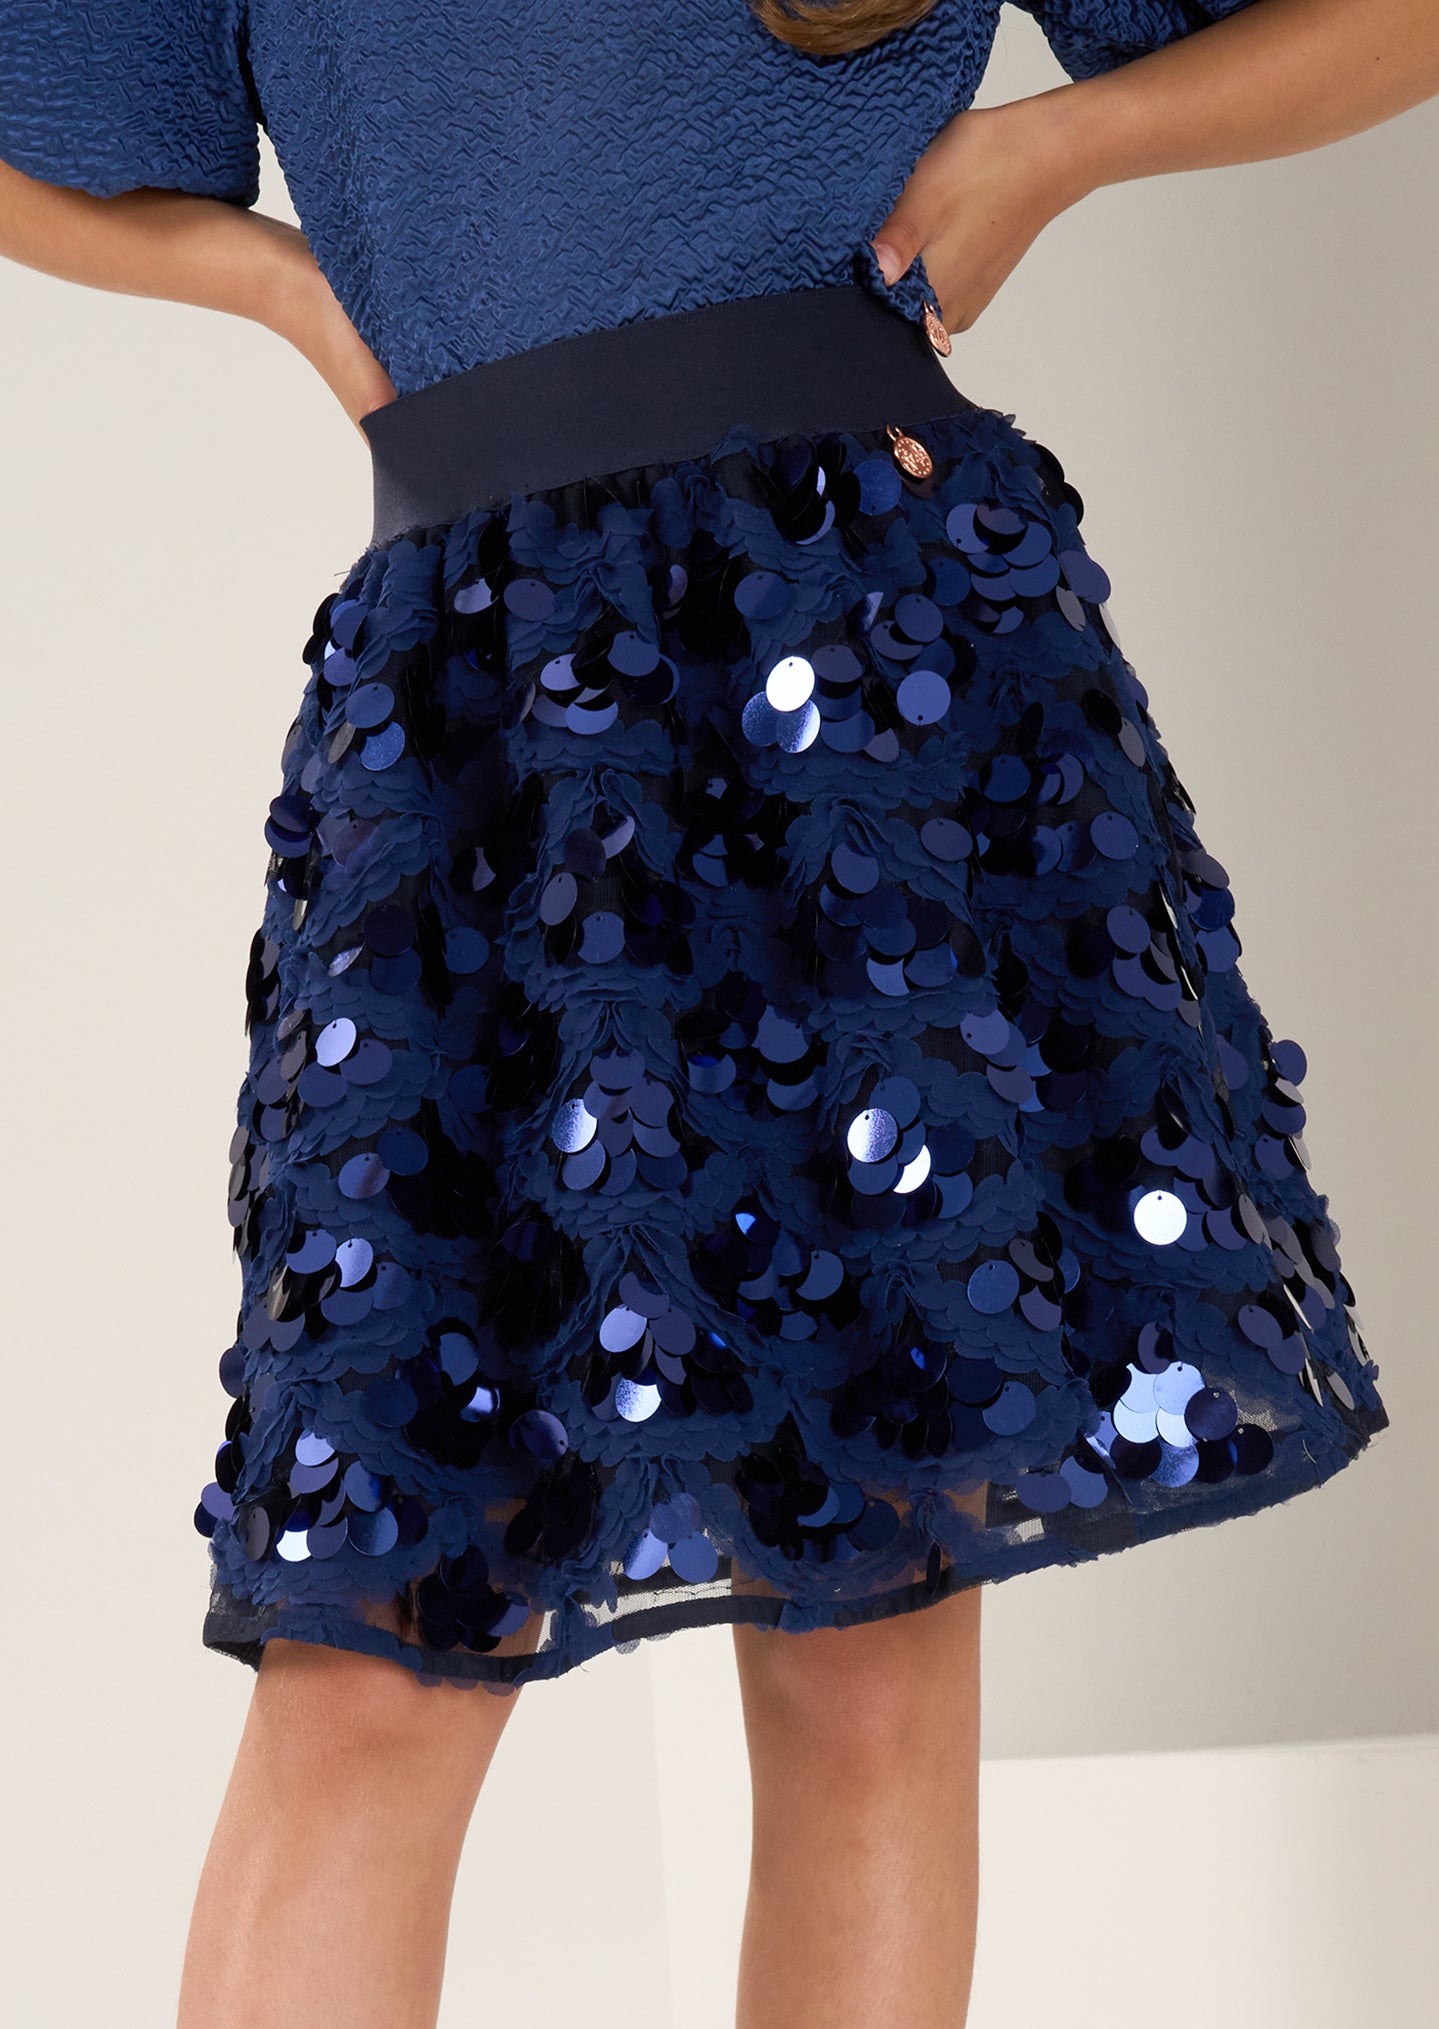 Girls Sequin Embellished Navy Skirt